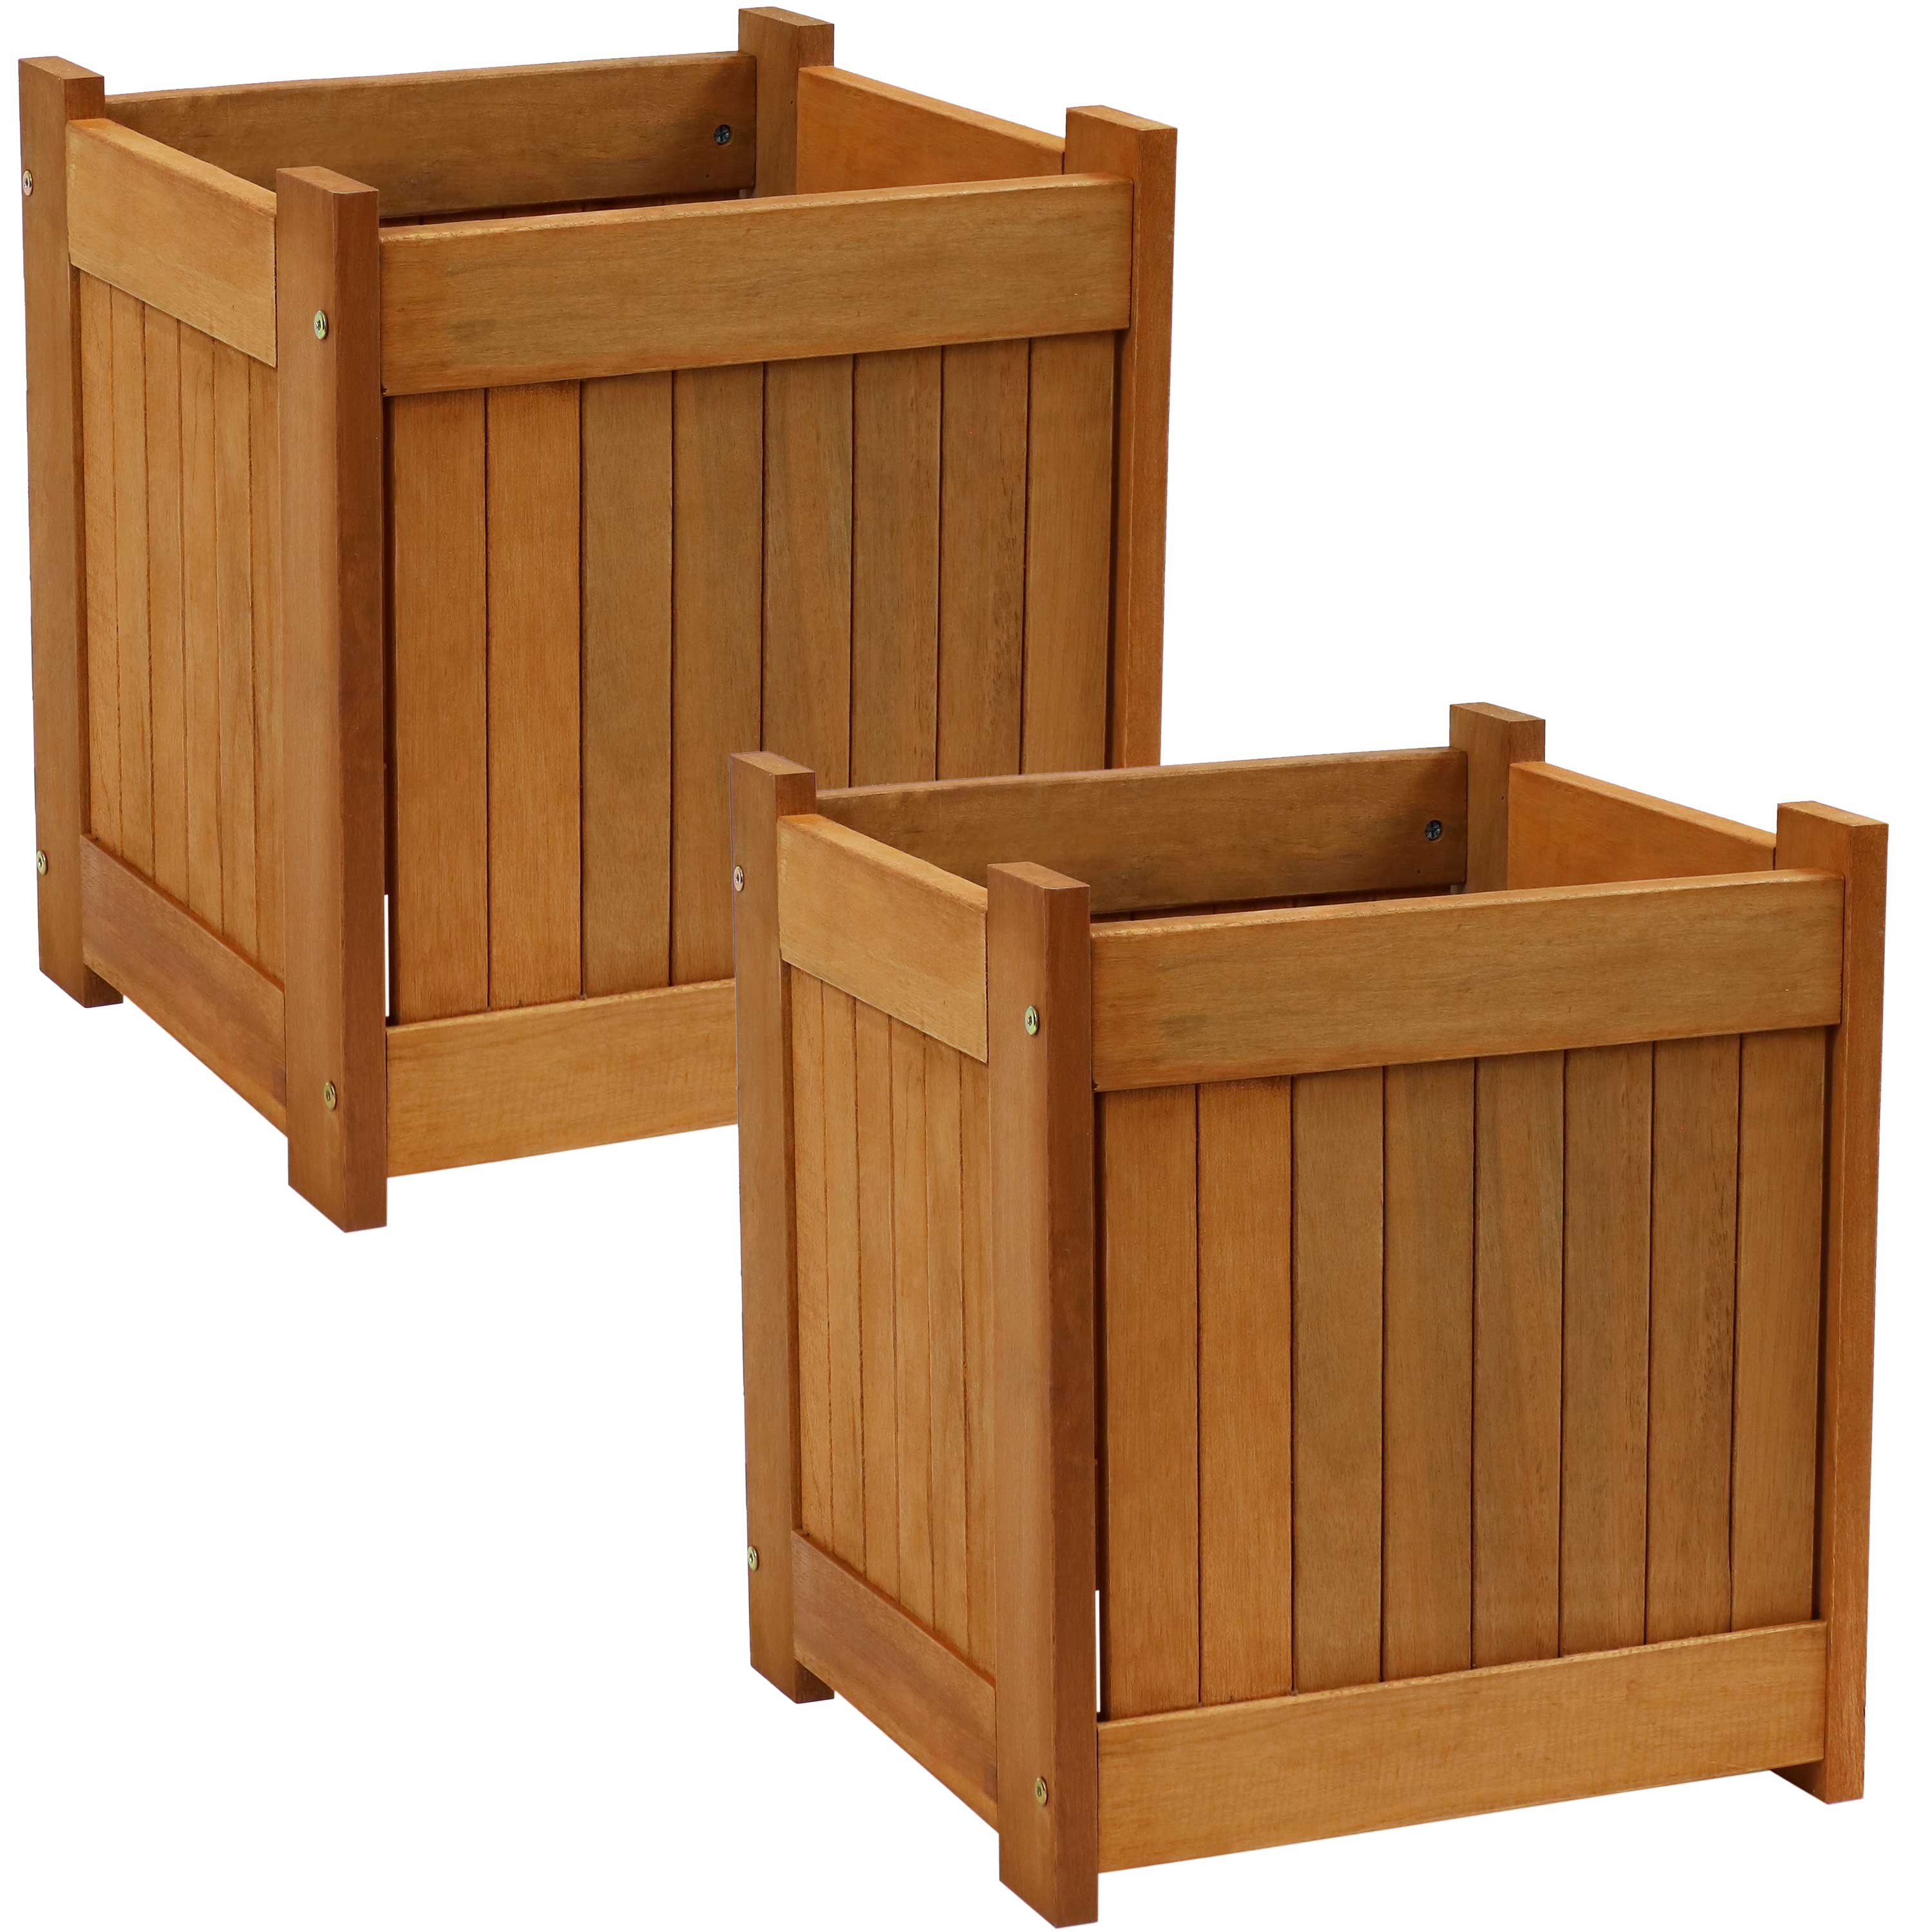 Sunnydaze Meranti Wood Outdoor Planter Box - 16-Inch  - Set of 2